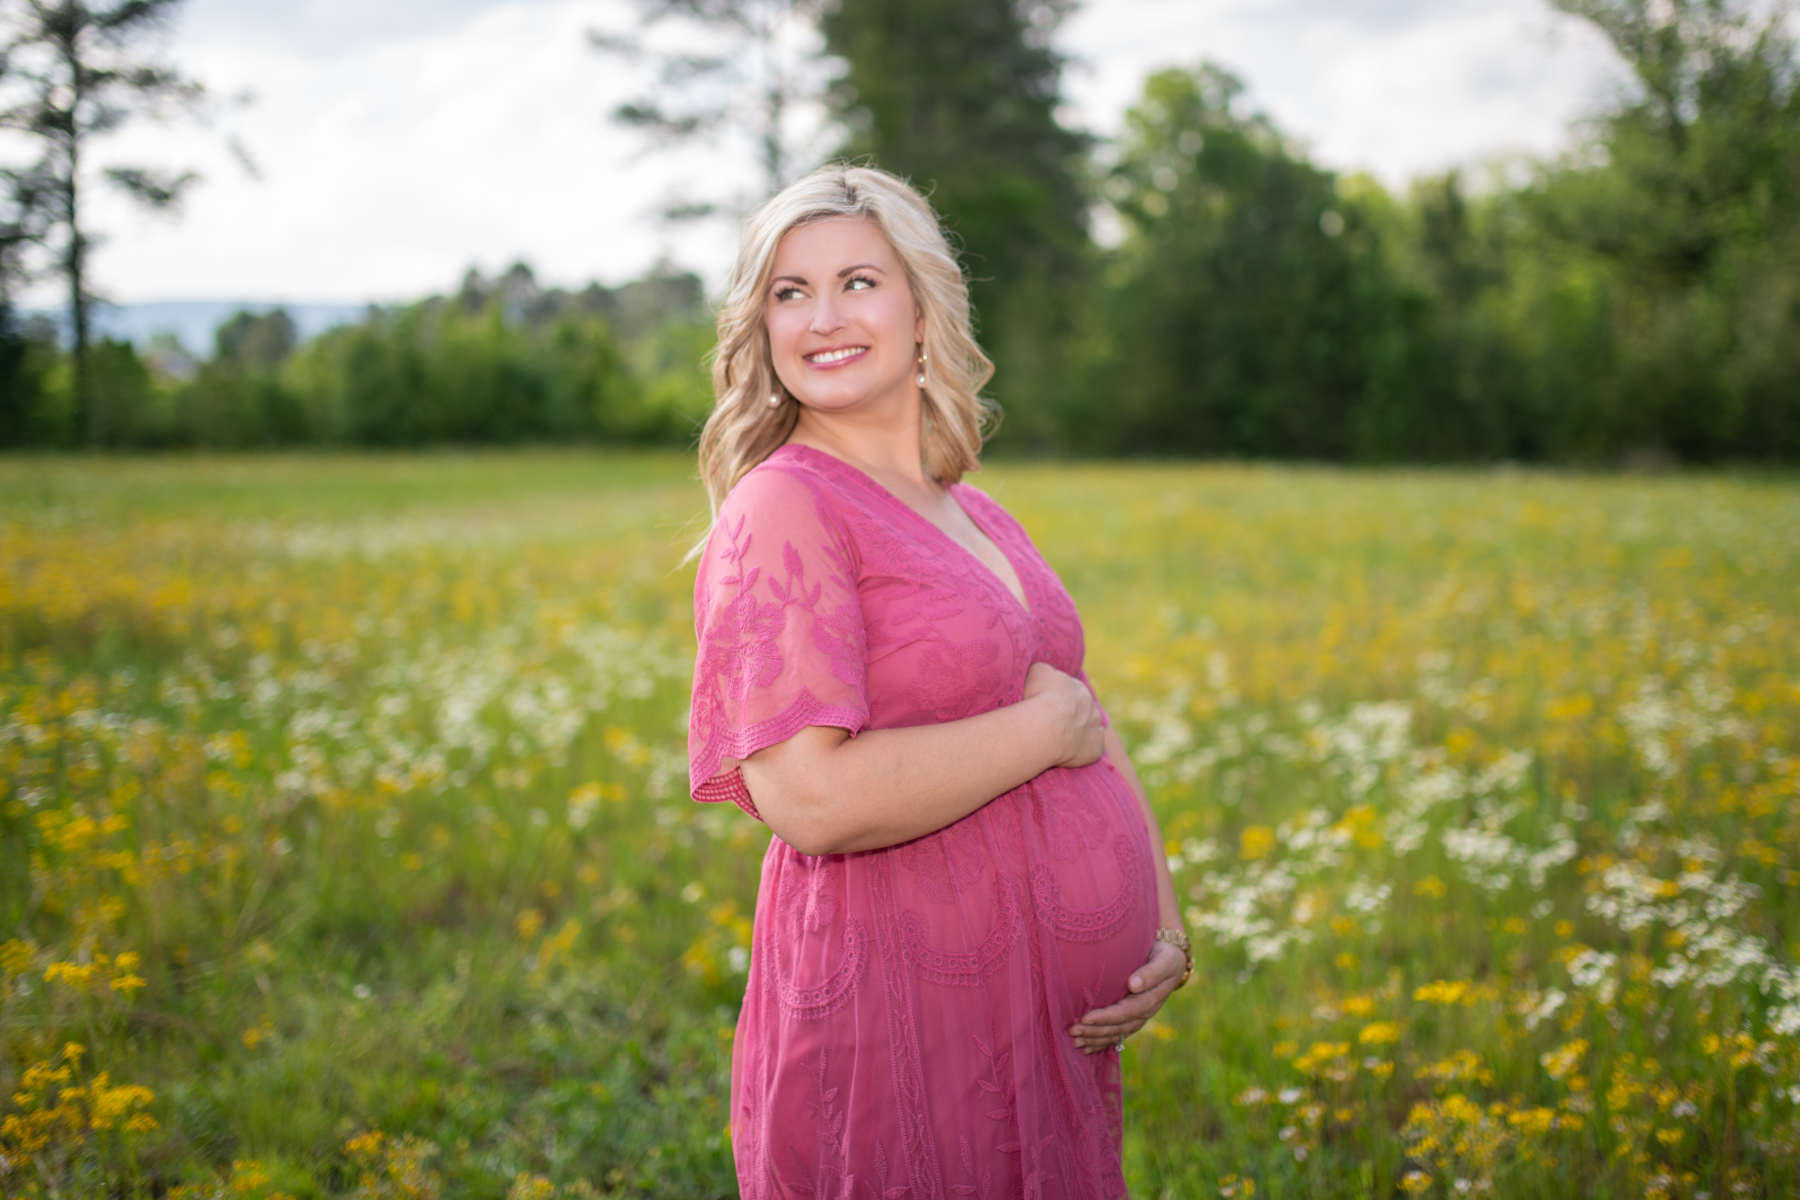 Chattanooga Newborn Photography - Chattanooga Maternity Photography ...